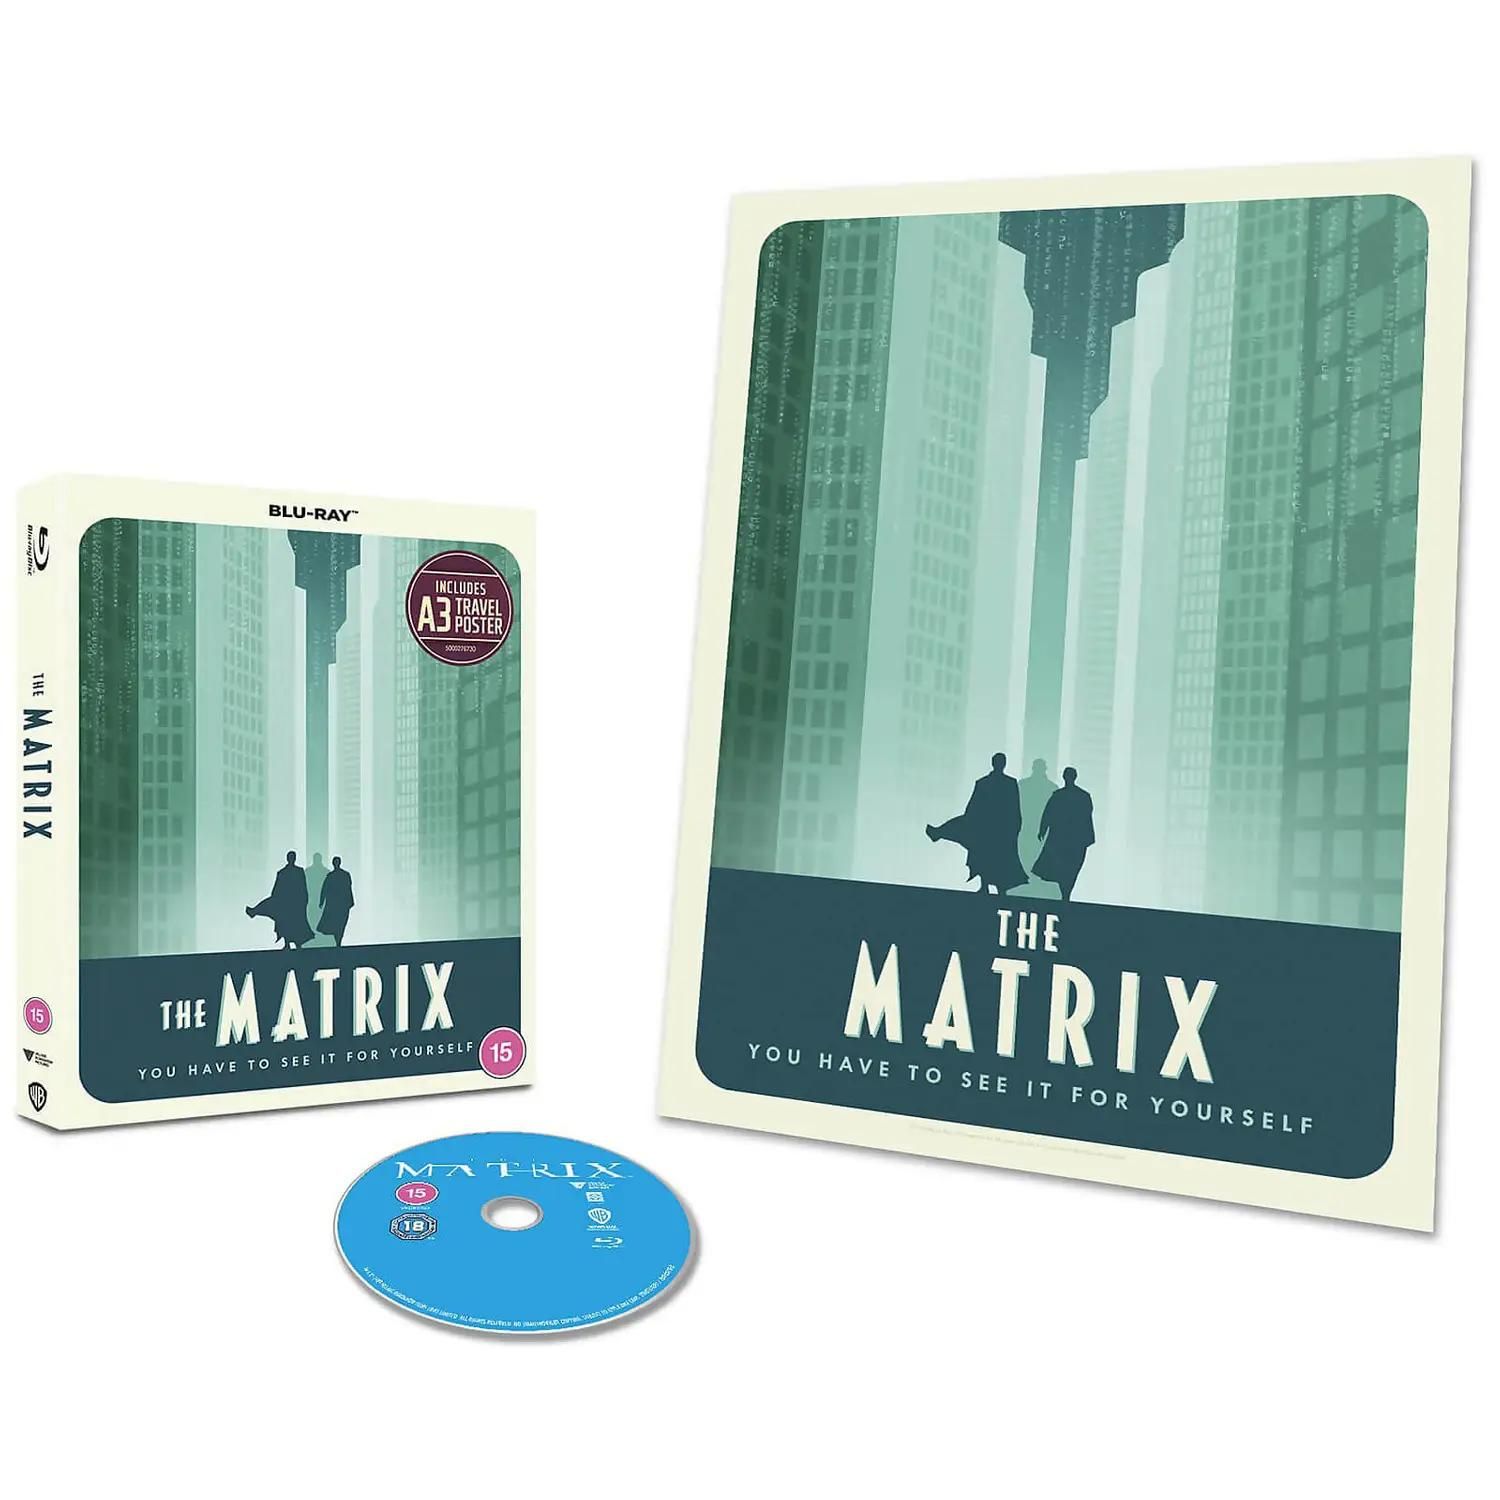 19+ Matrix 4 Trailer Footage Leak Images